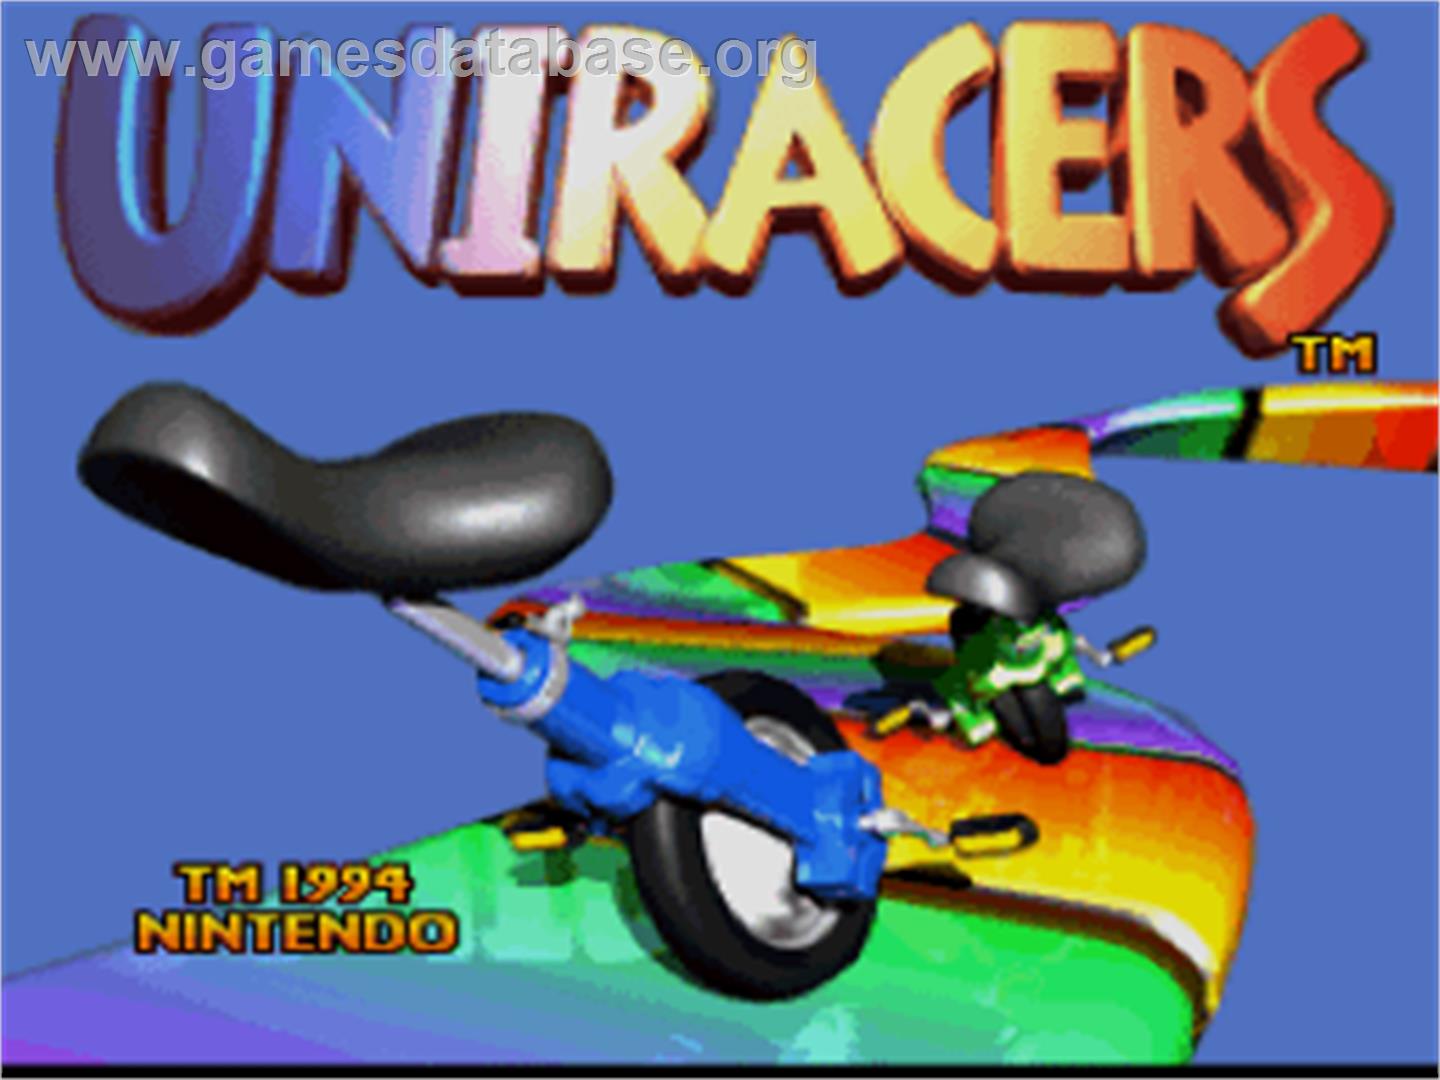 Uniracers - Nintendo SNES - Artwork - Title Screen